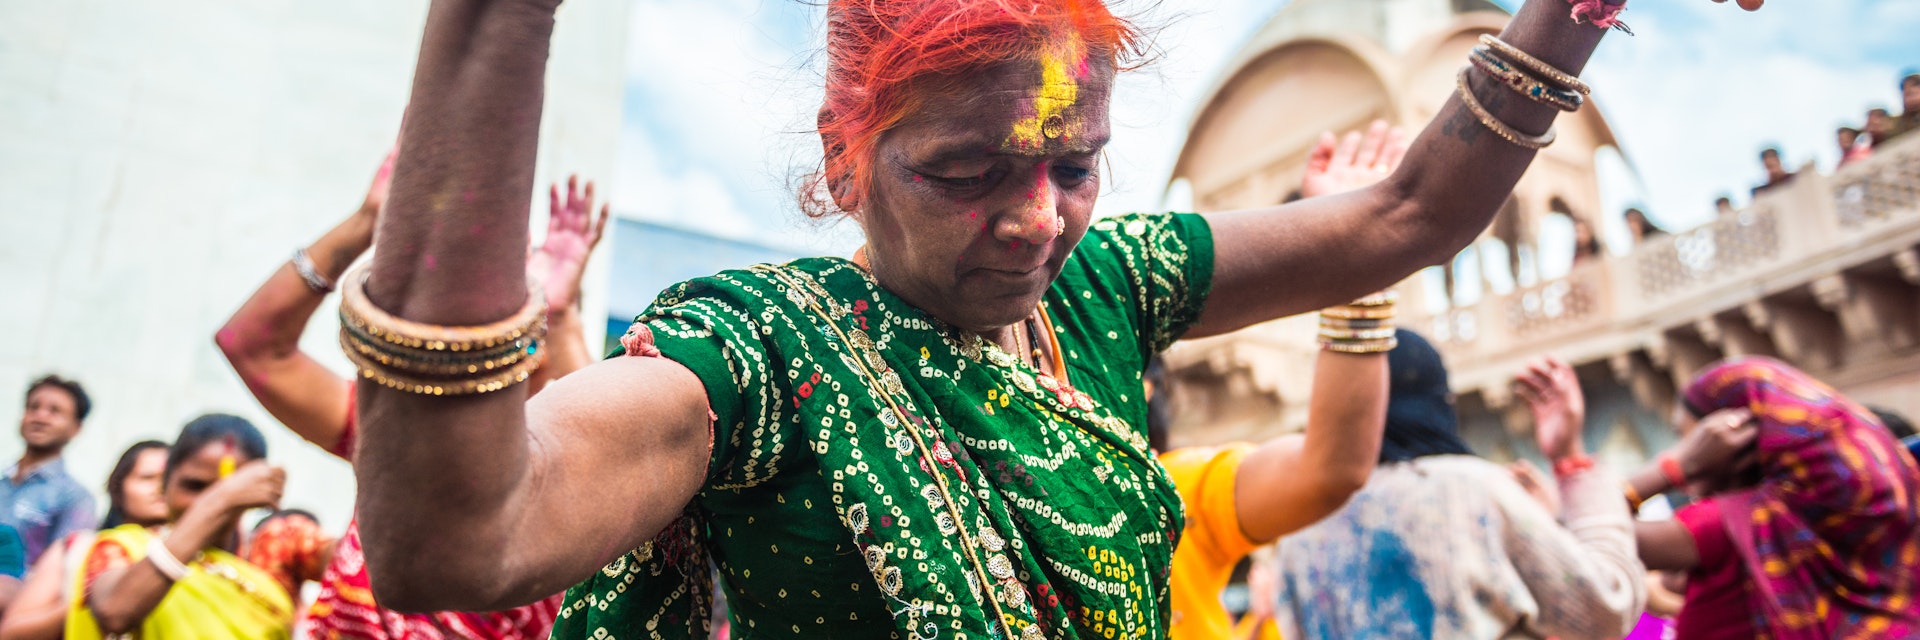 Barsana, India - March 10, 2014: Senior Indian woman celebrates Holi dancing in Radha Rani Temple in Barsana Village.